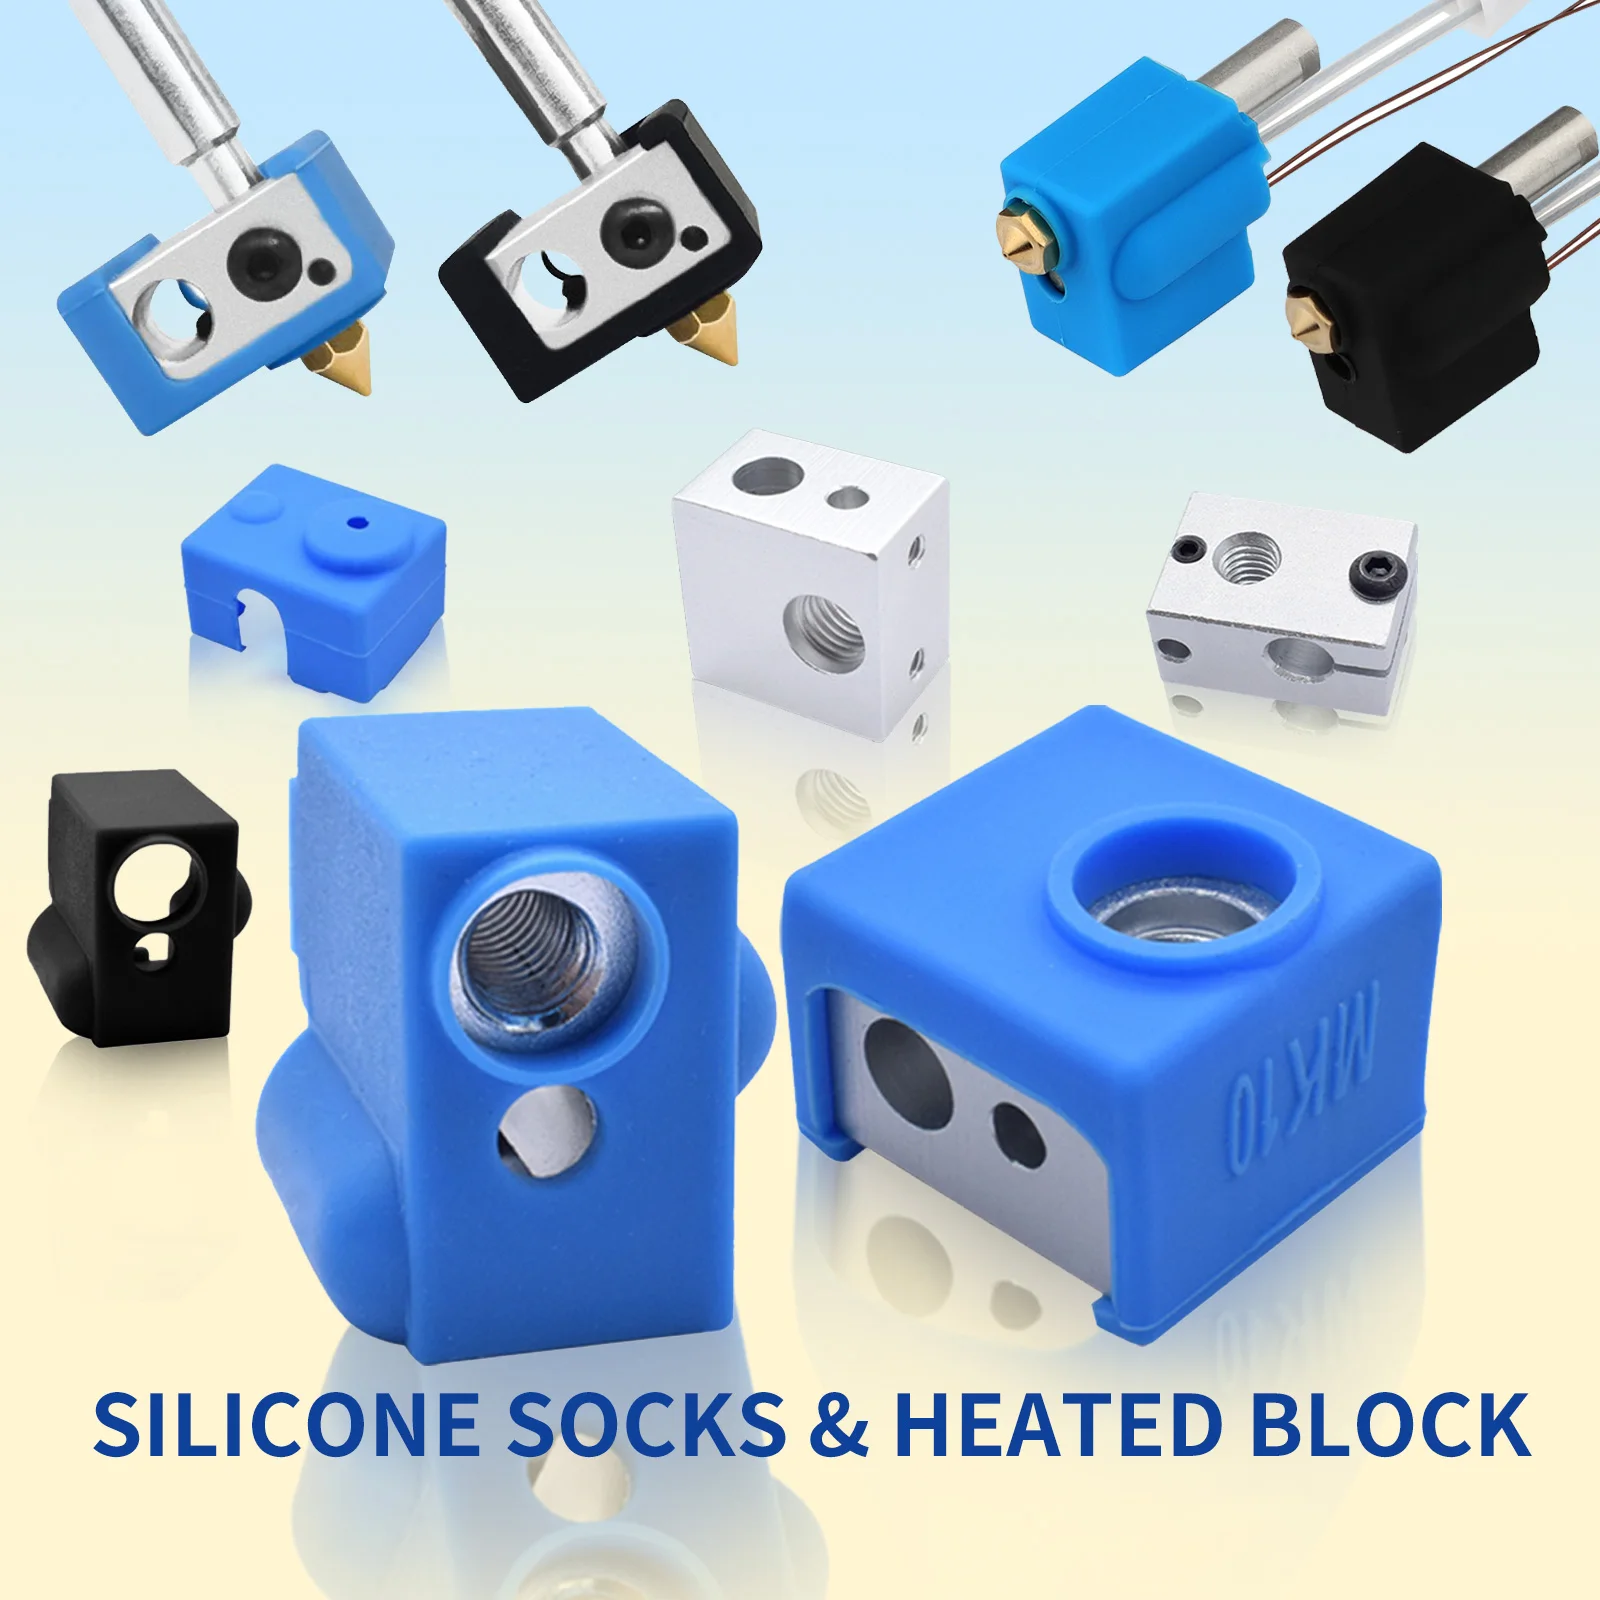 Silicone Socks For E3D V6/V5 MK8 MK9/MK10/Volnaco Heated Block Sleeve Hotend Protector Cover For 3D Printer Parts Heater Blocks